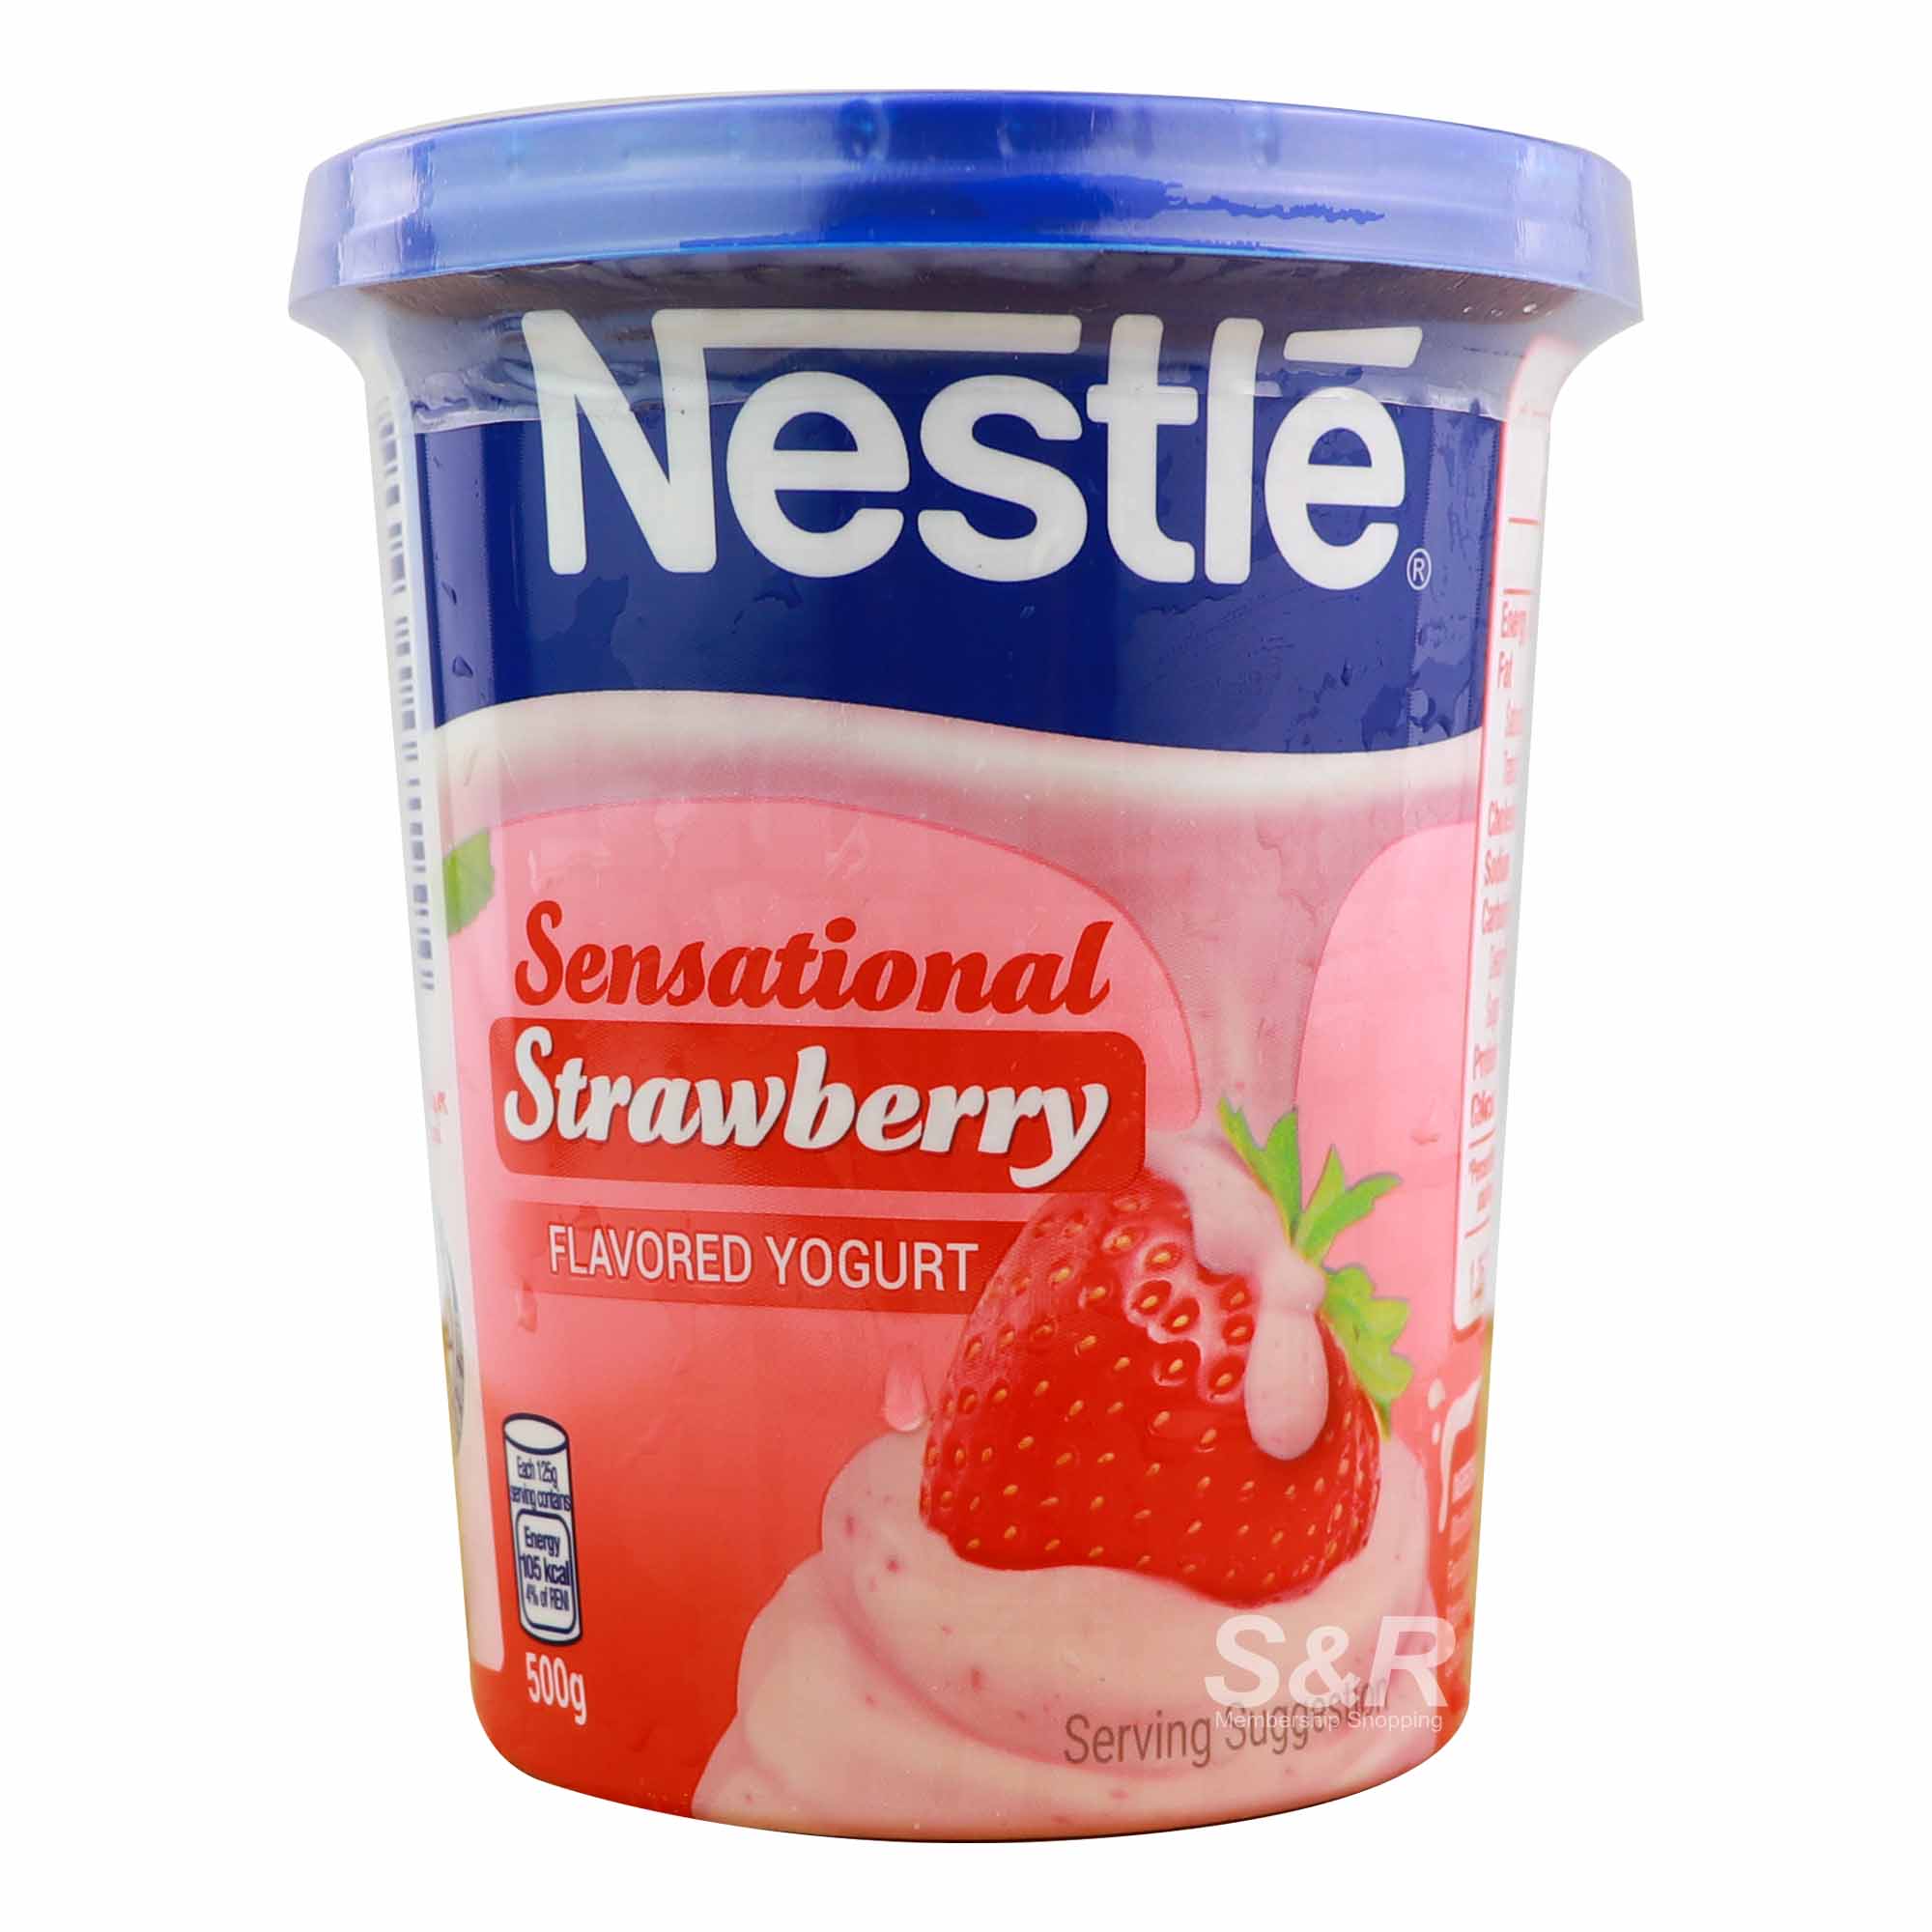 Nestle Sensational Strawberry Flavored Yogurt 500g